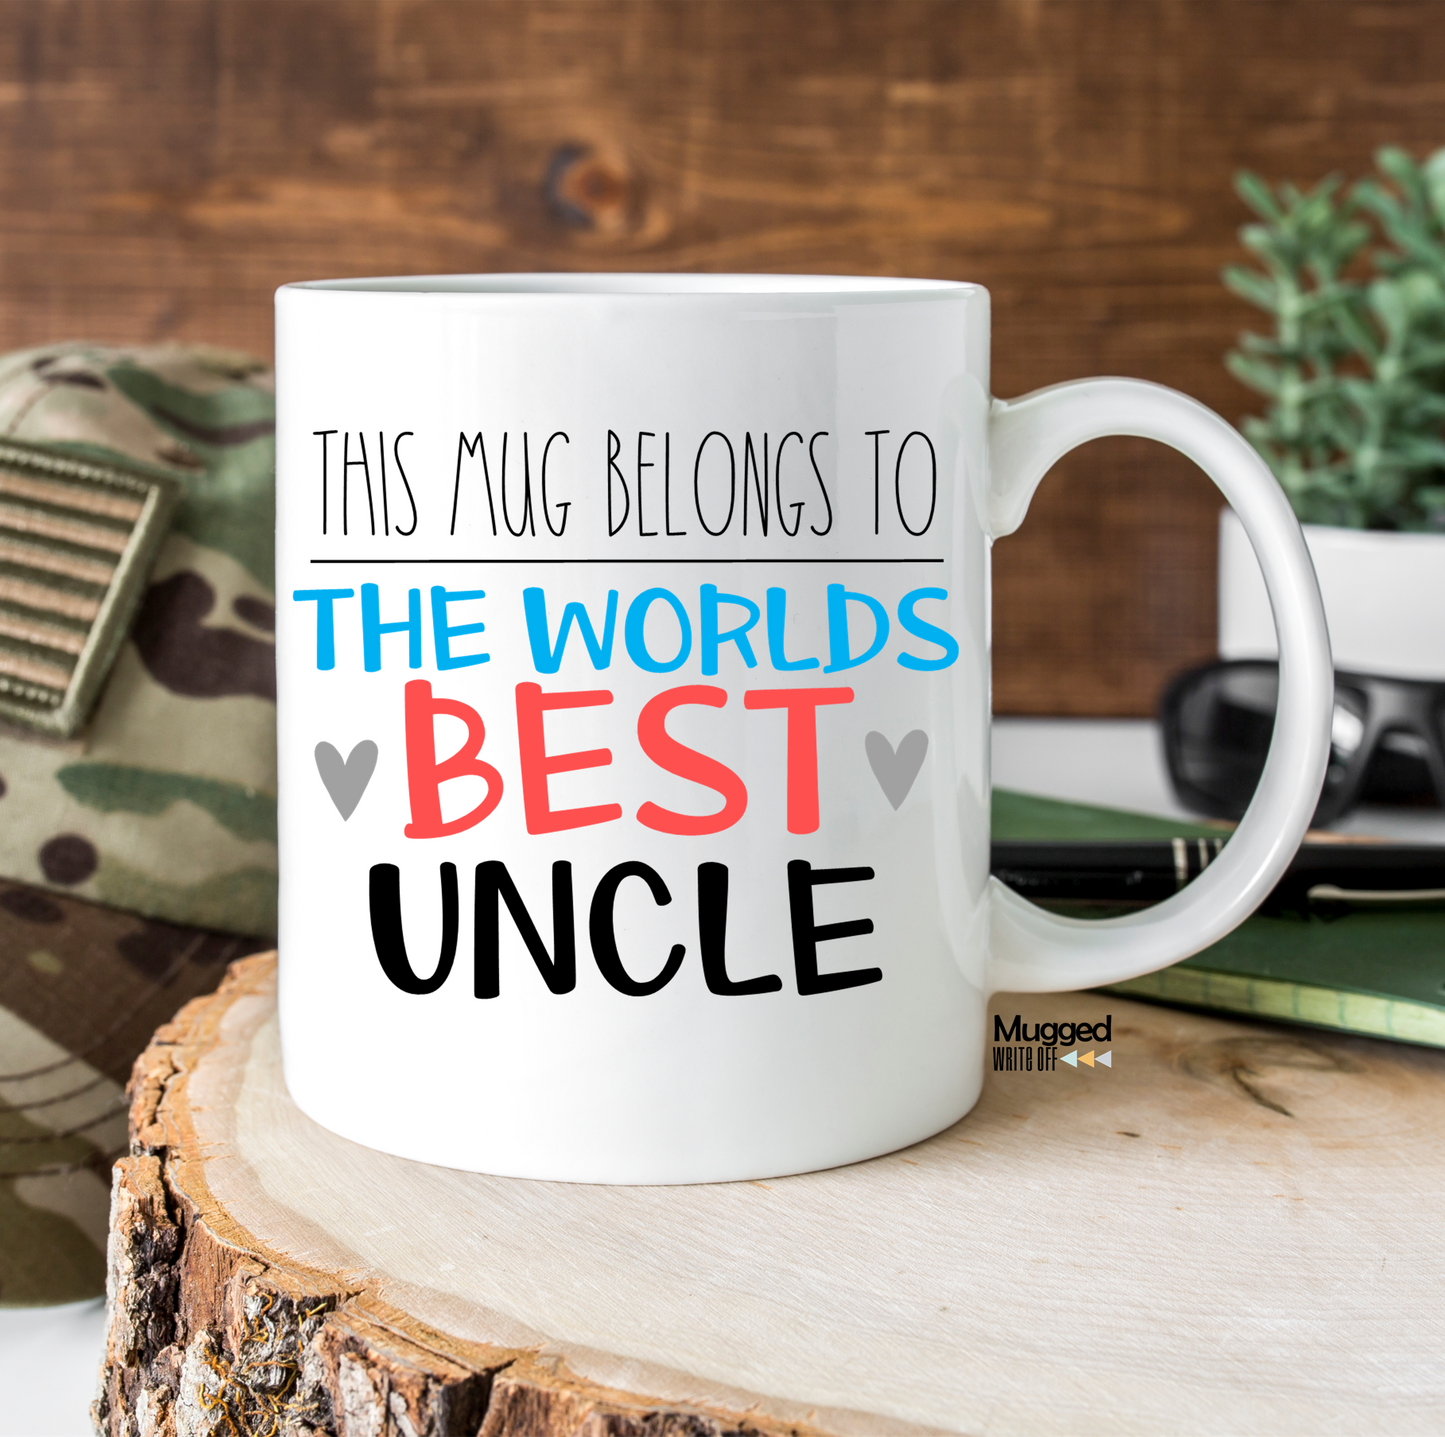 This Mug Belongs To The World's Best Uncle Mug - Mugged Write Off Limited